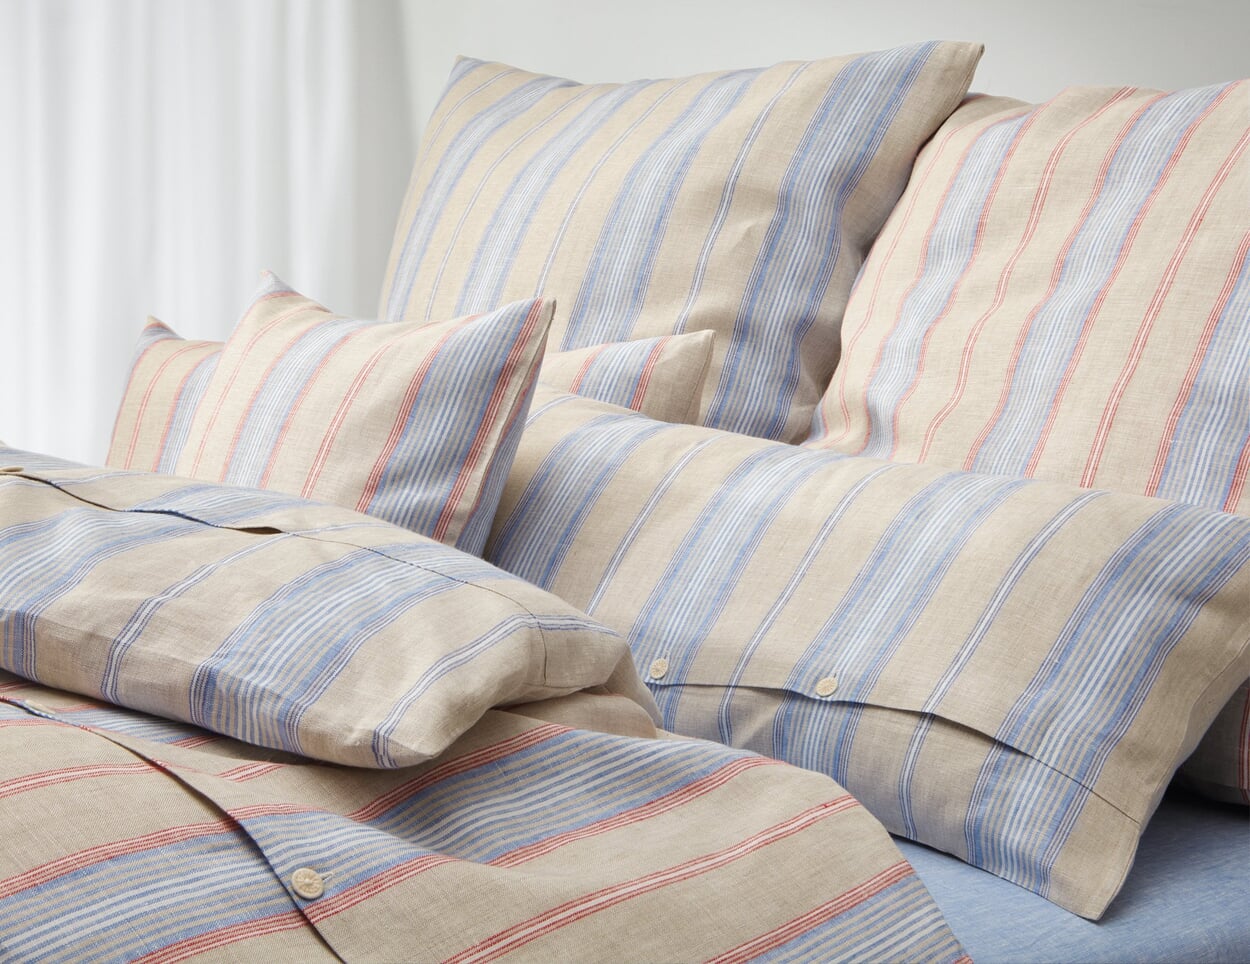 Linen striped comforter cover